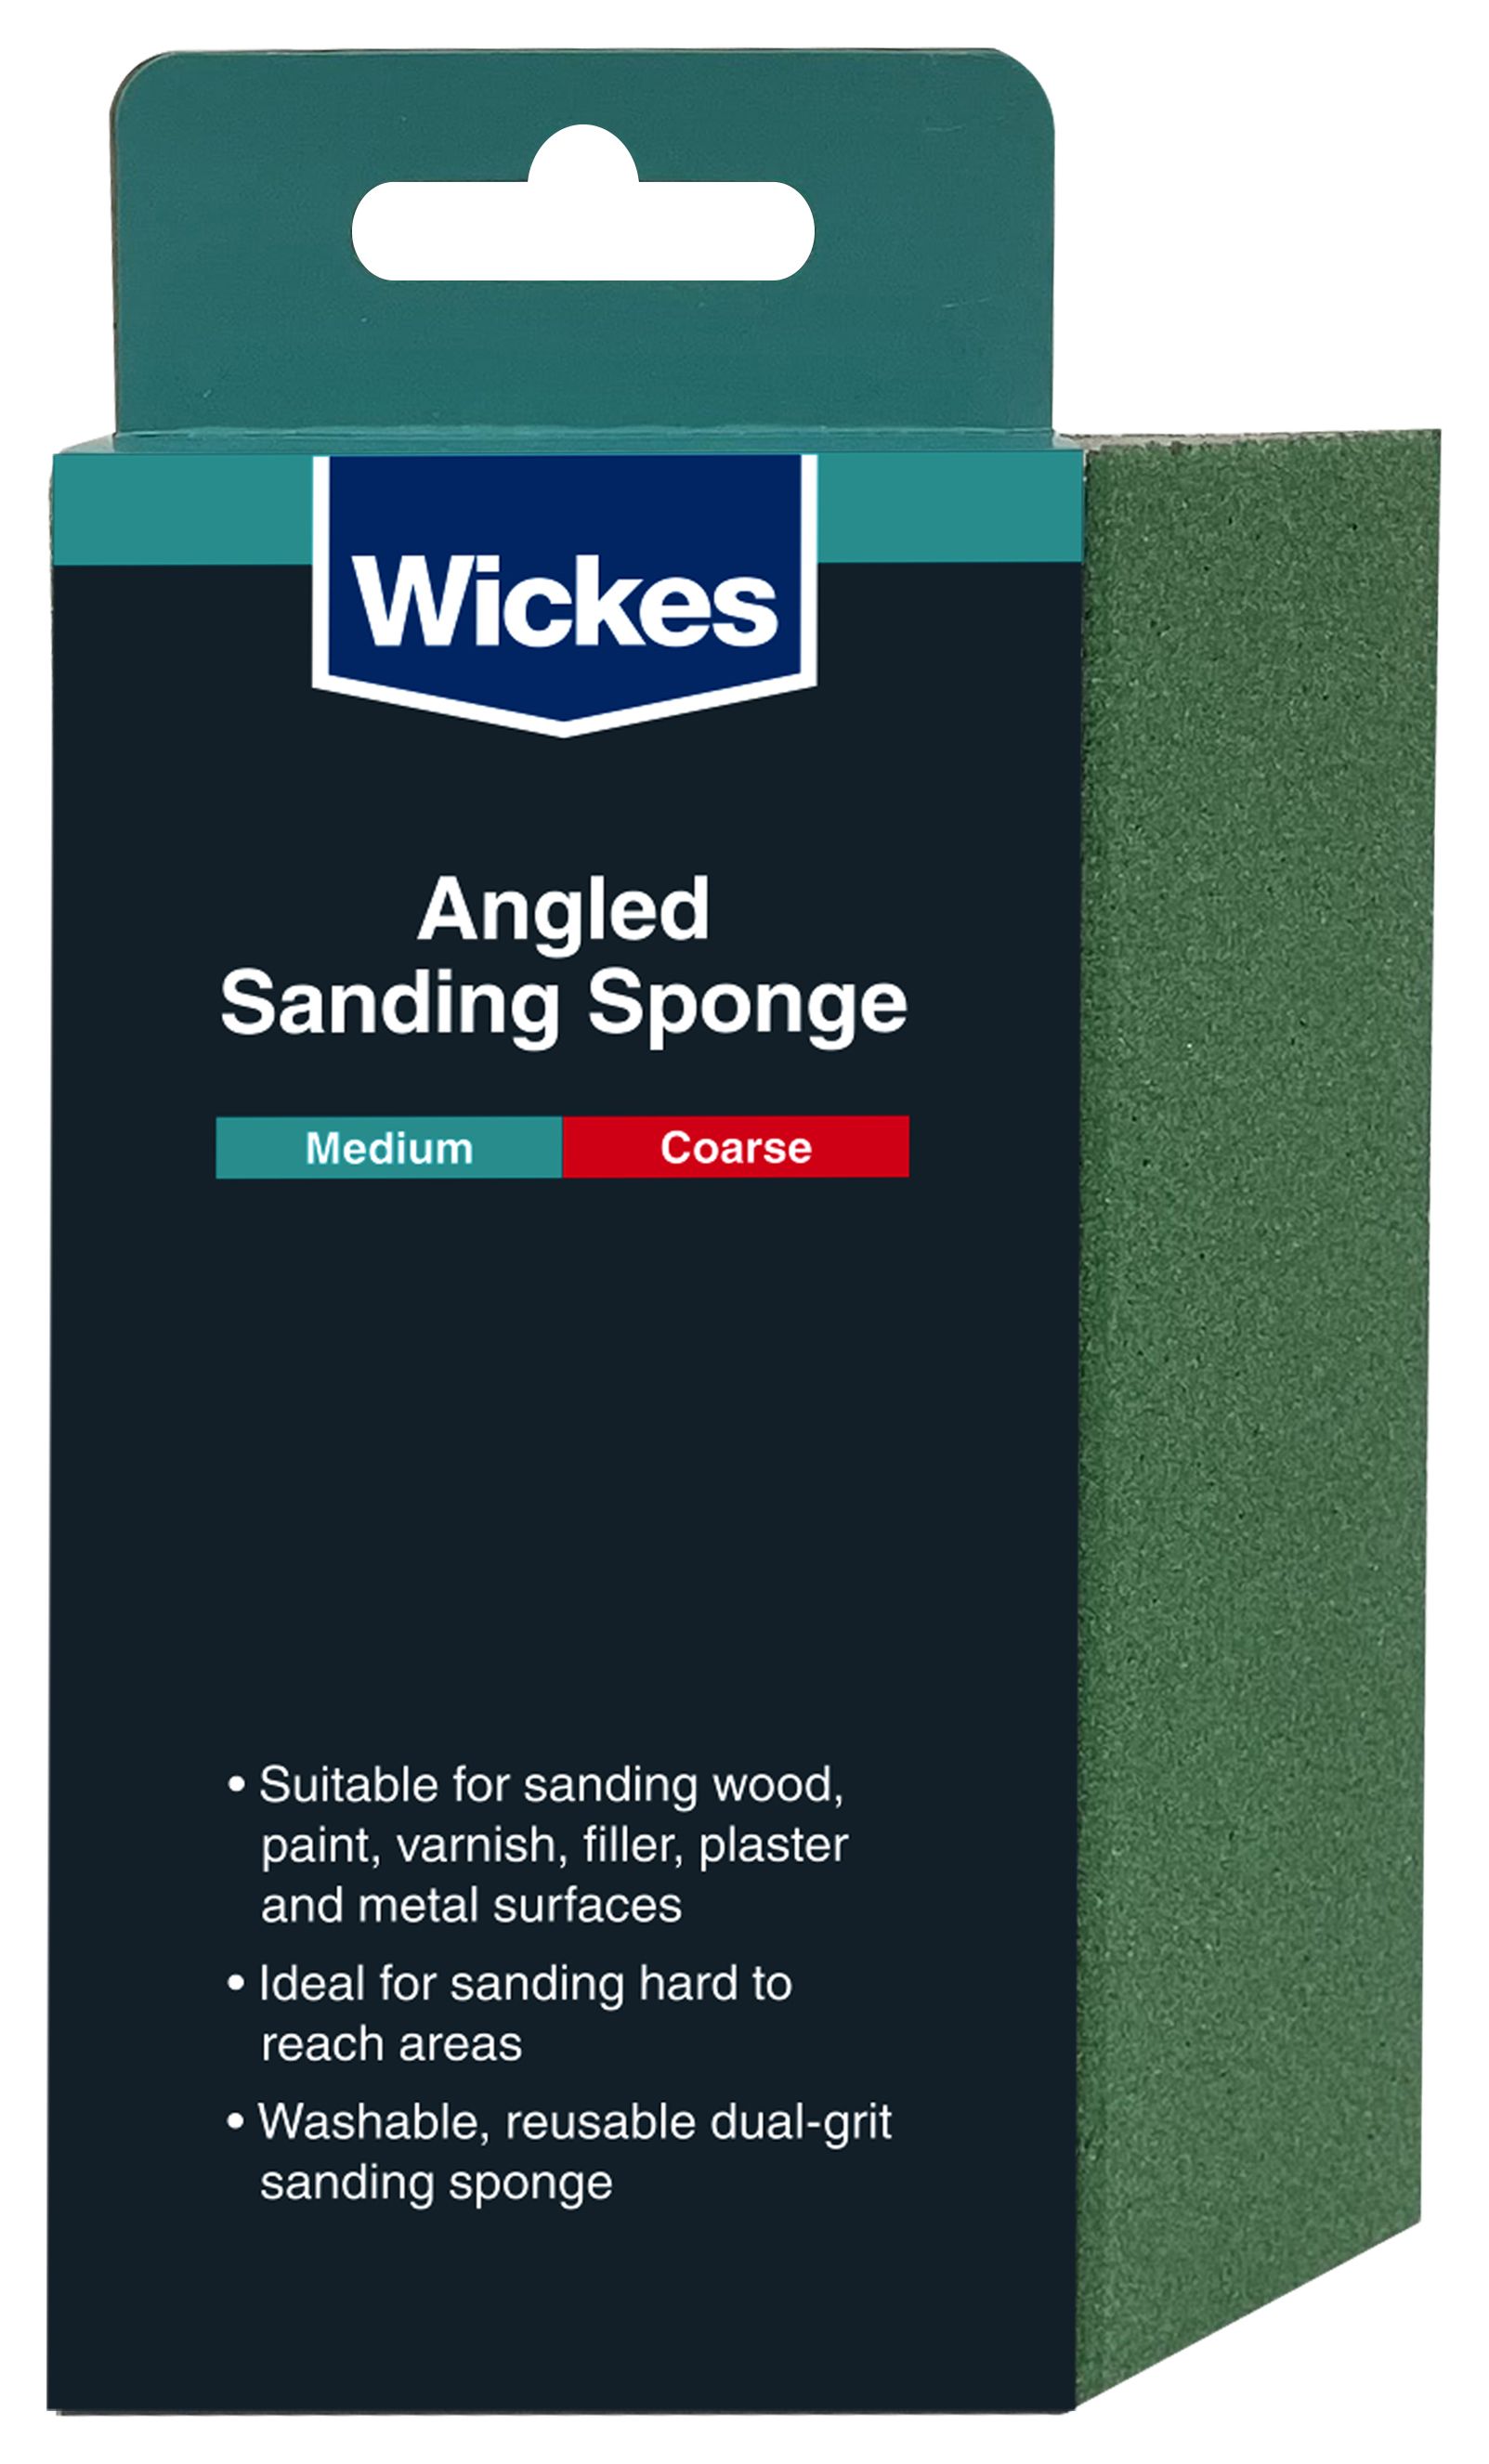 Image of Wickes Angled Sanding Sponge - Medium/Coarse